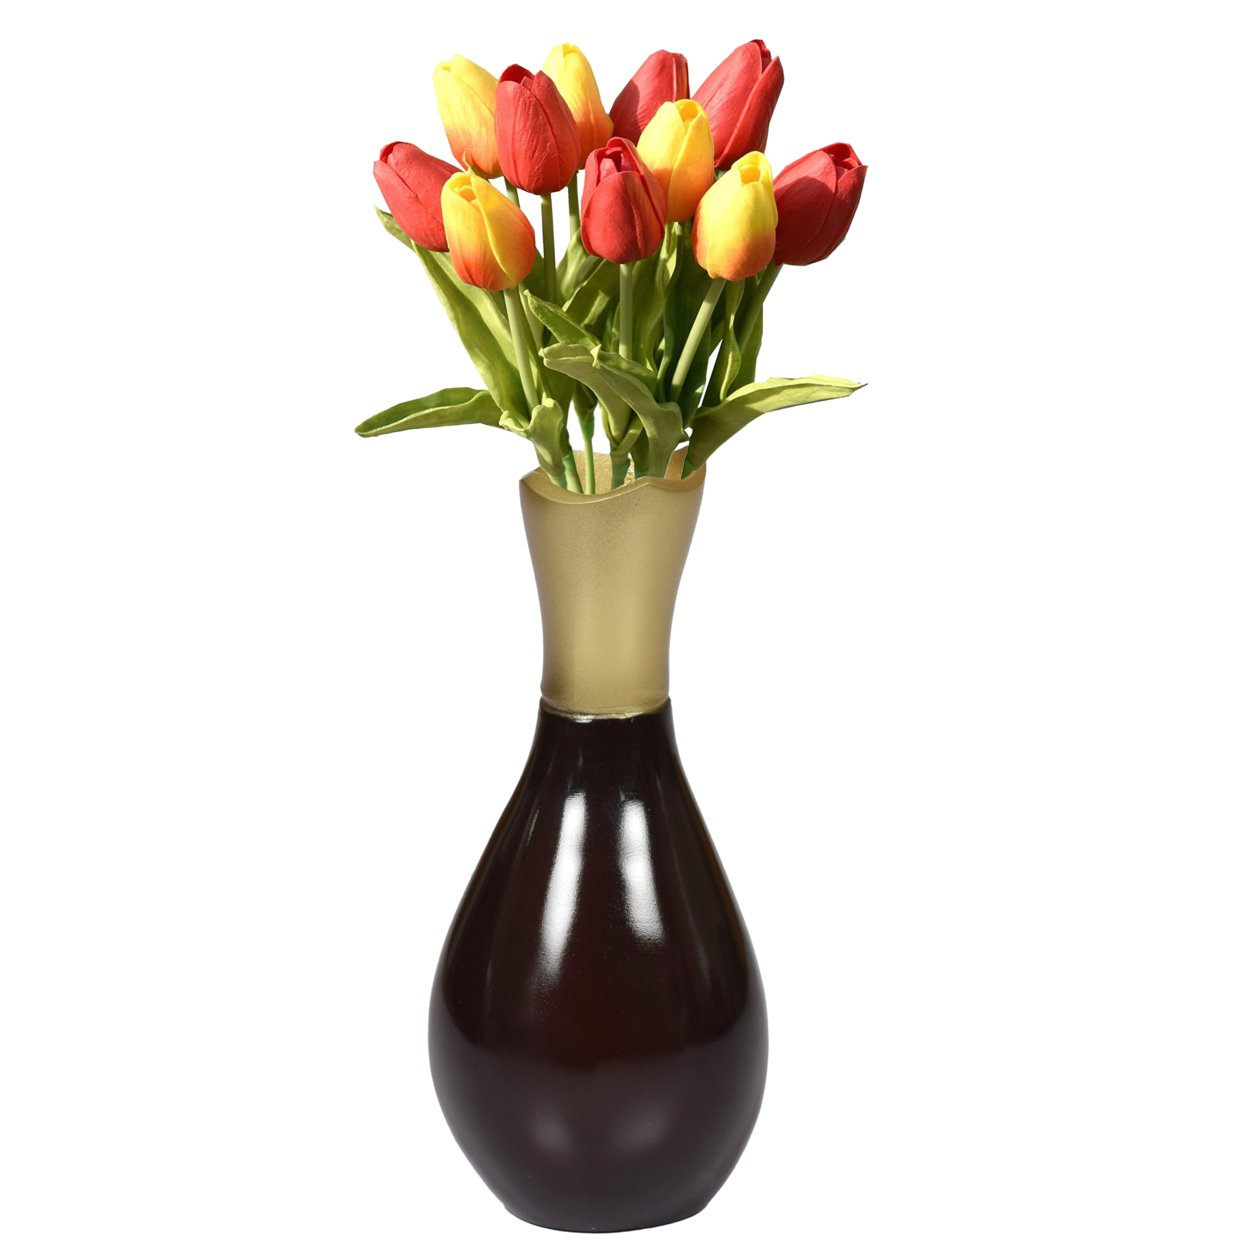 Aluminium-Casted Modern Decorative Flower Table Vase - Small